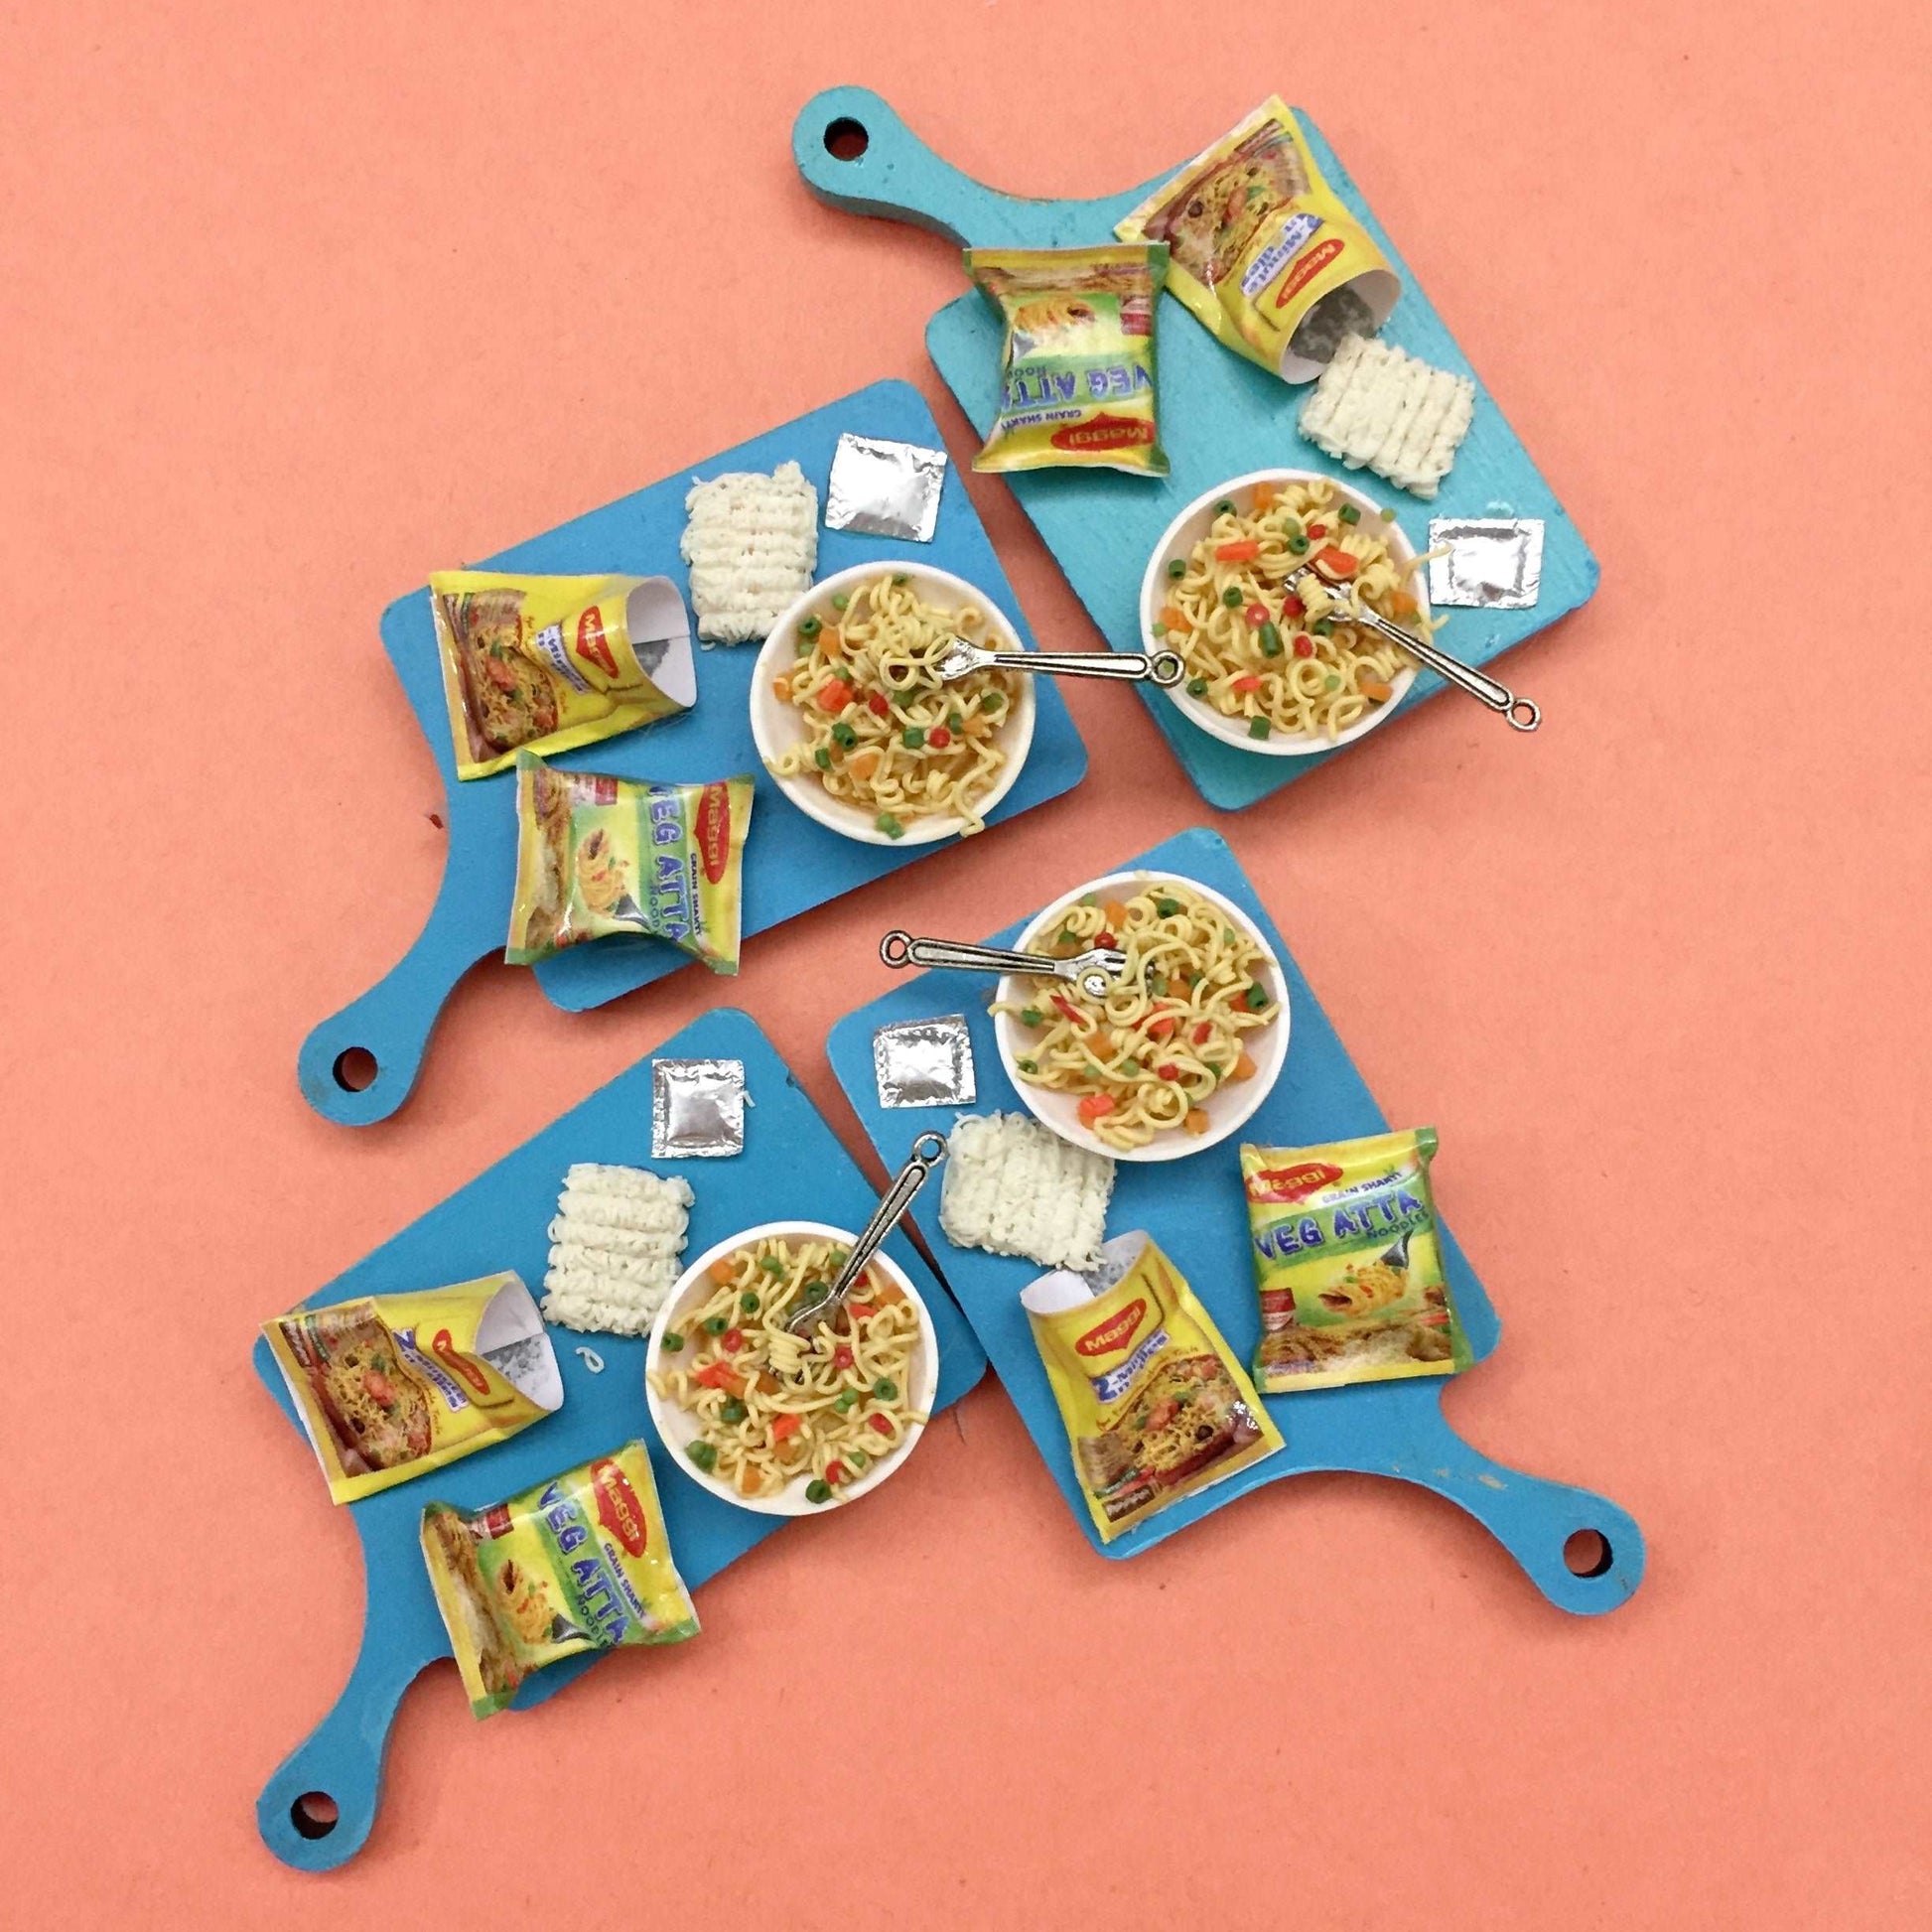 Maggi Instant Noodle Miniature Food Magnet